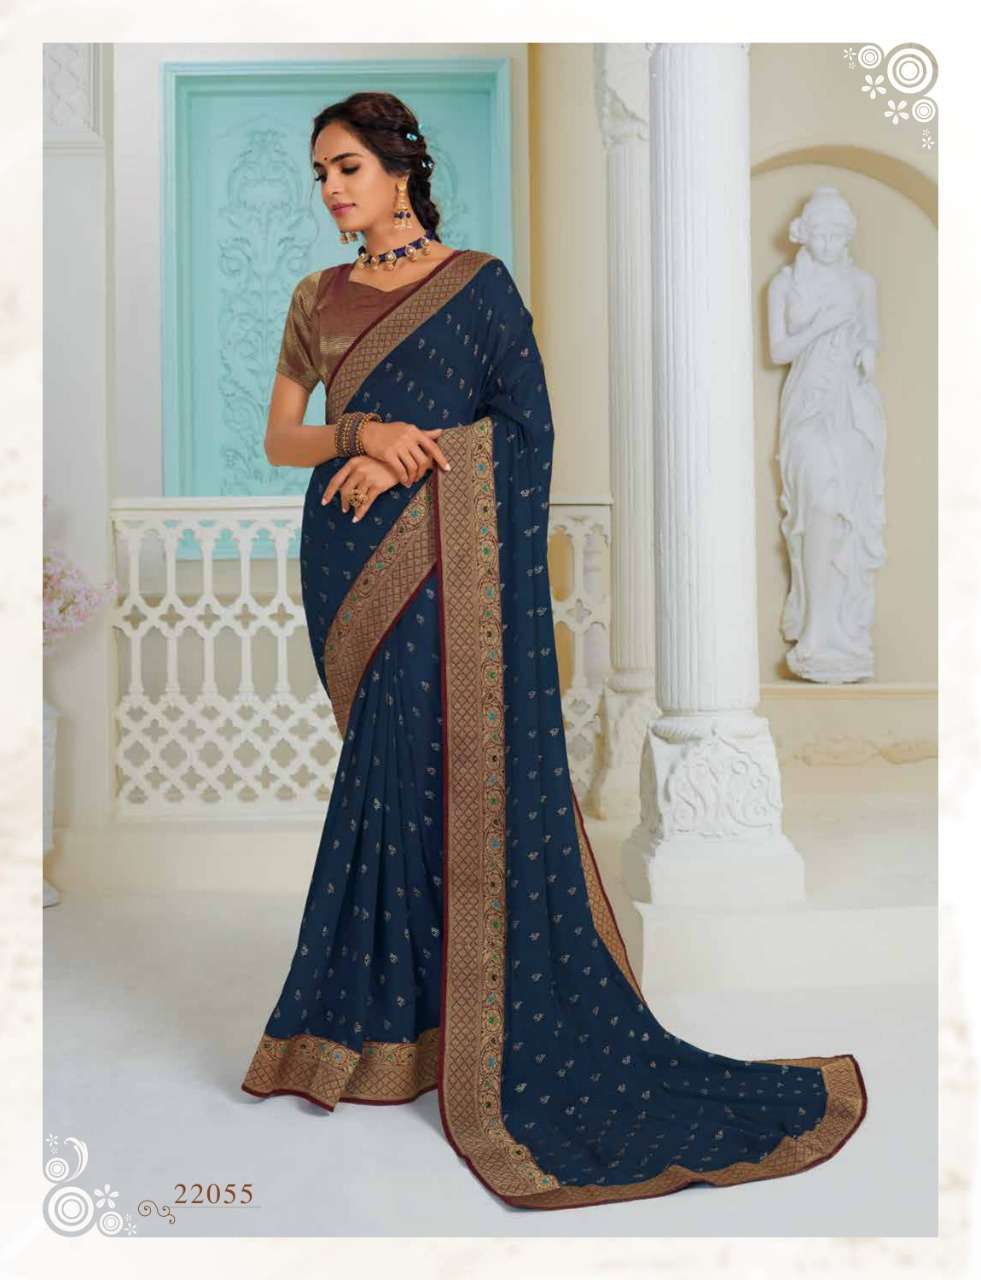 Subhash Manjri Fancy Designer Party Wear Sarees Collection 0...